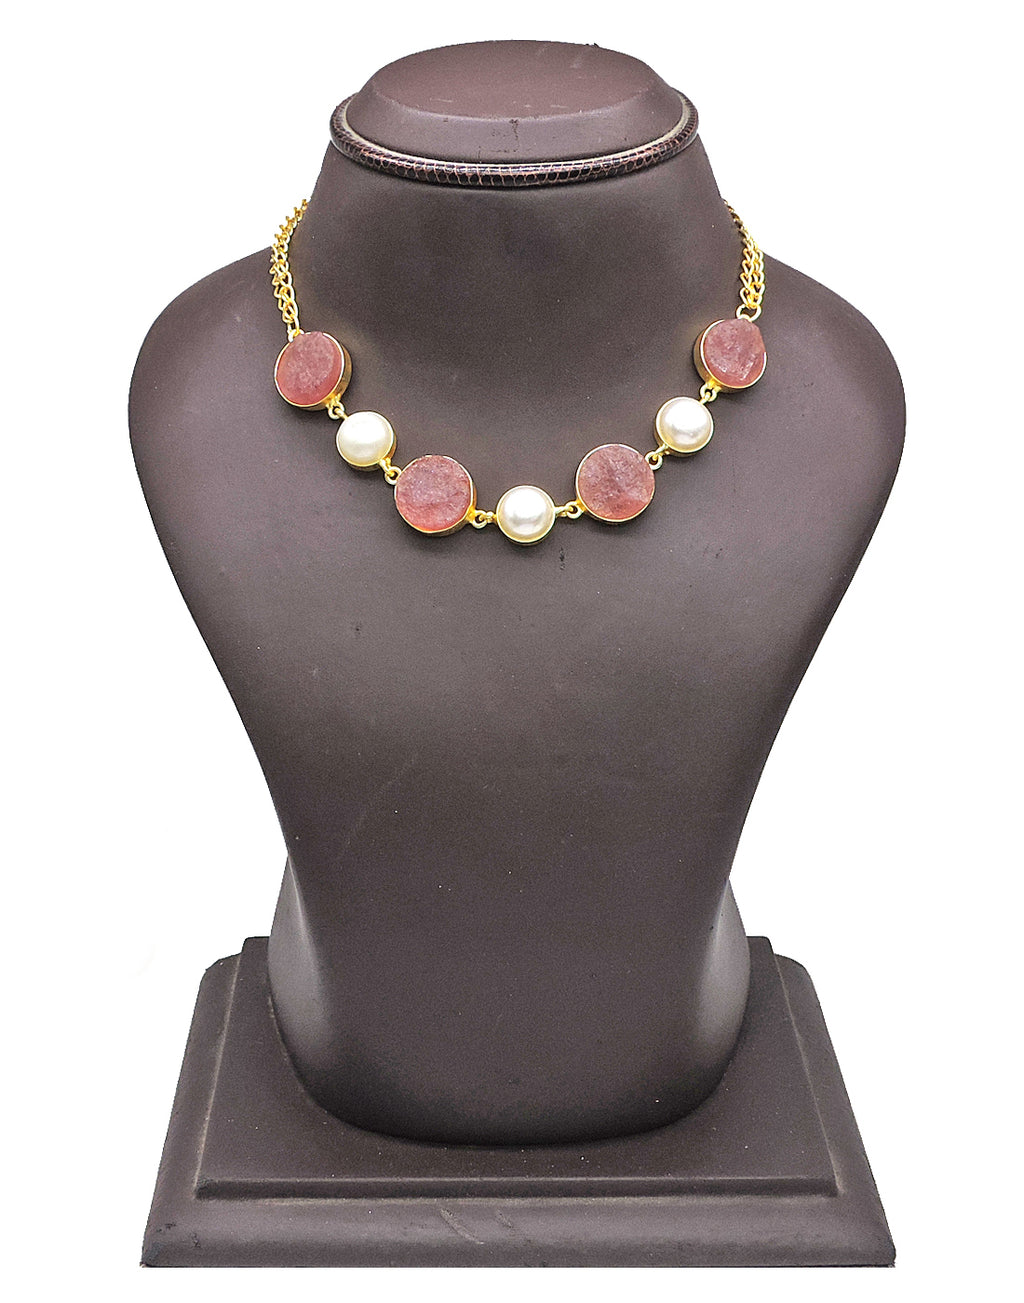 Quartz & Pearl Necklace - Statement Necklaces - Gold-Plated & Hypoallergenic Jewellery - Made in India - Dubai Jewellery - Dori